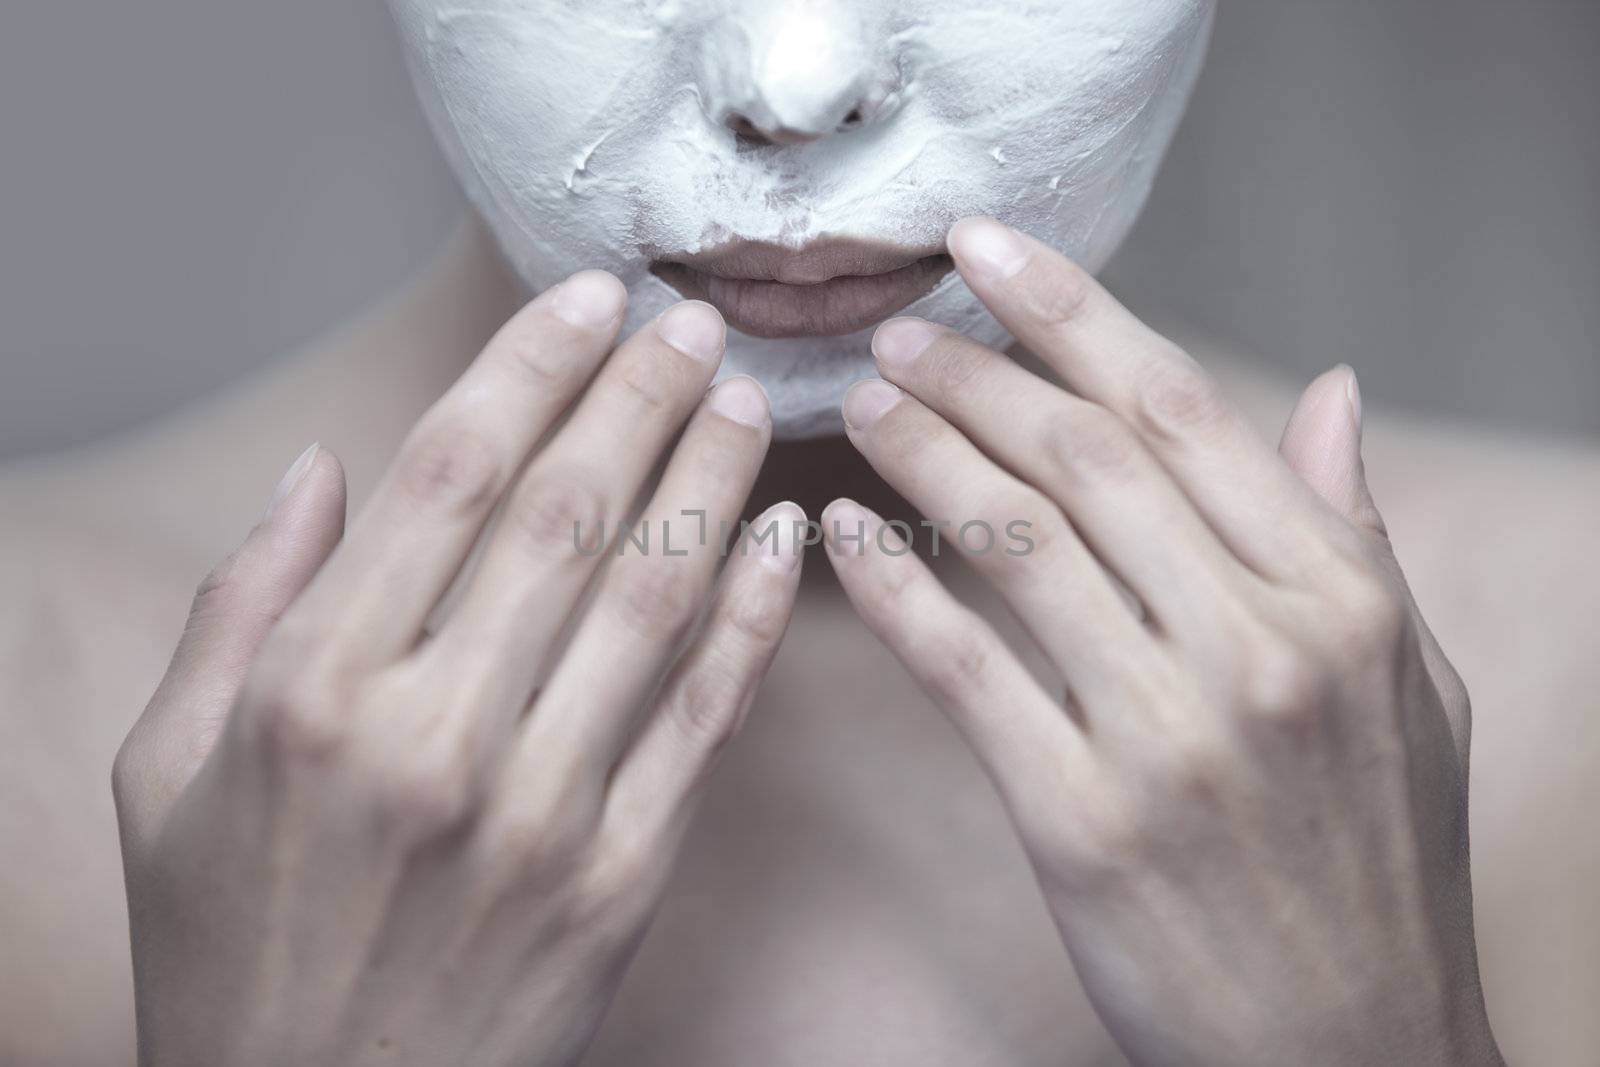 Facial mask by Novic